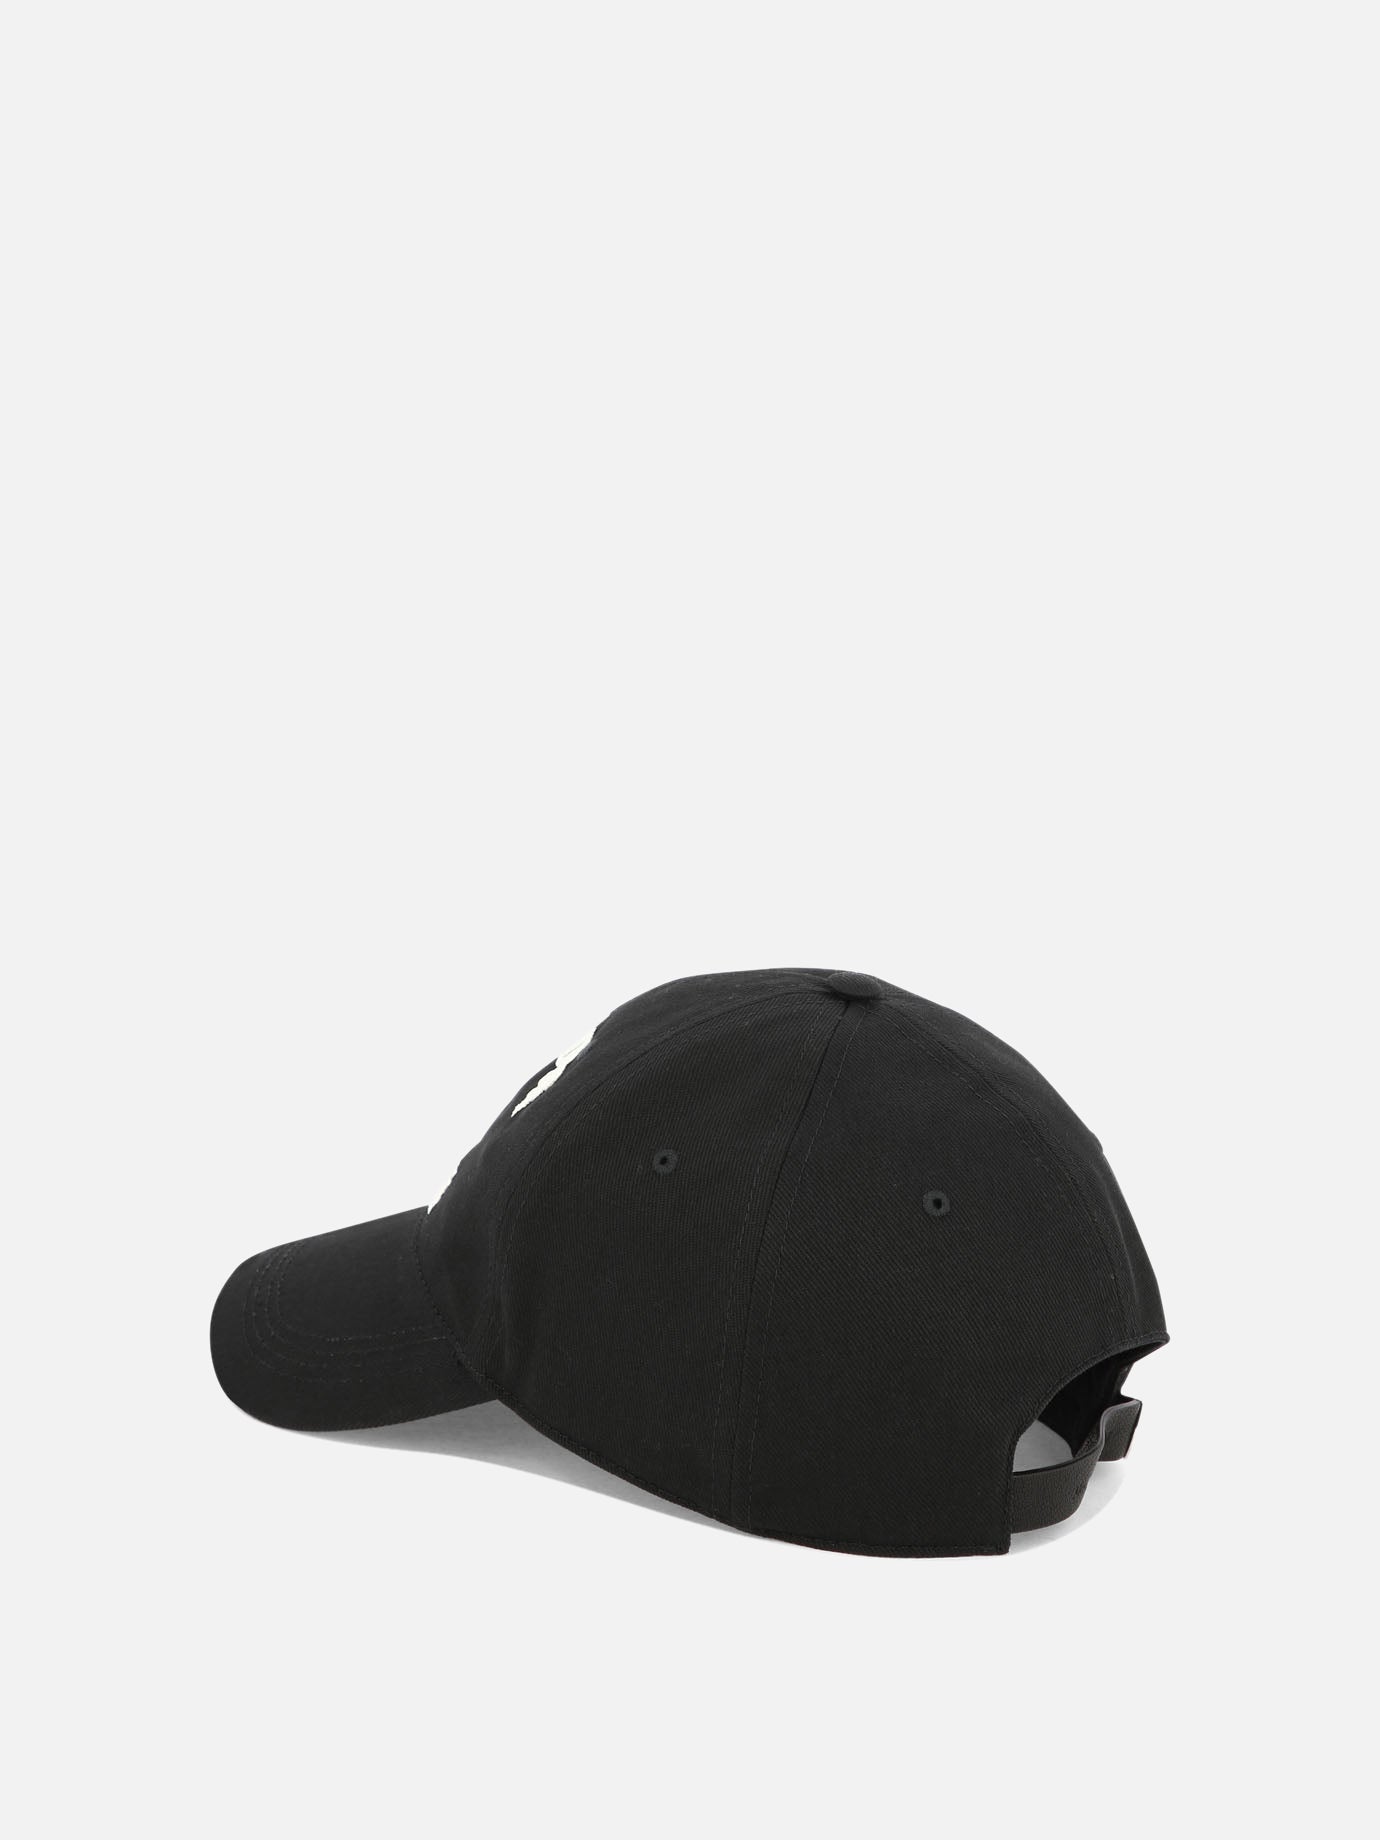 "Alexander McQueen" baseball cap